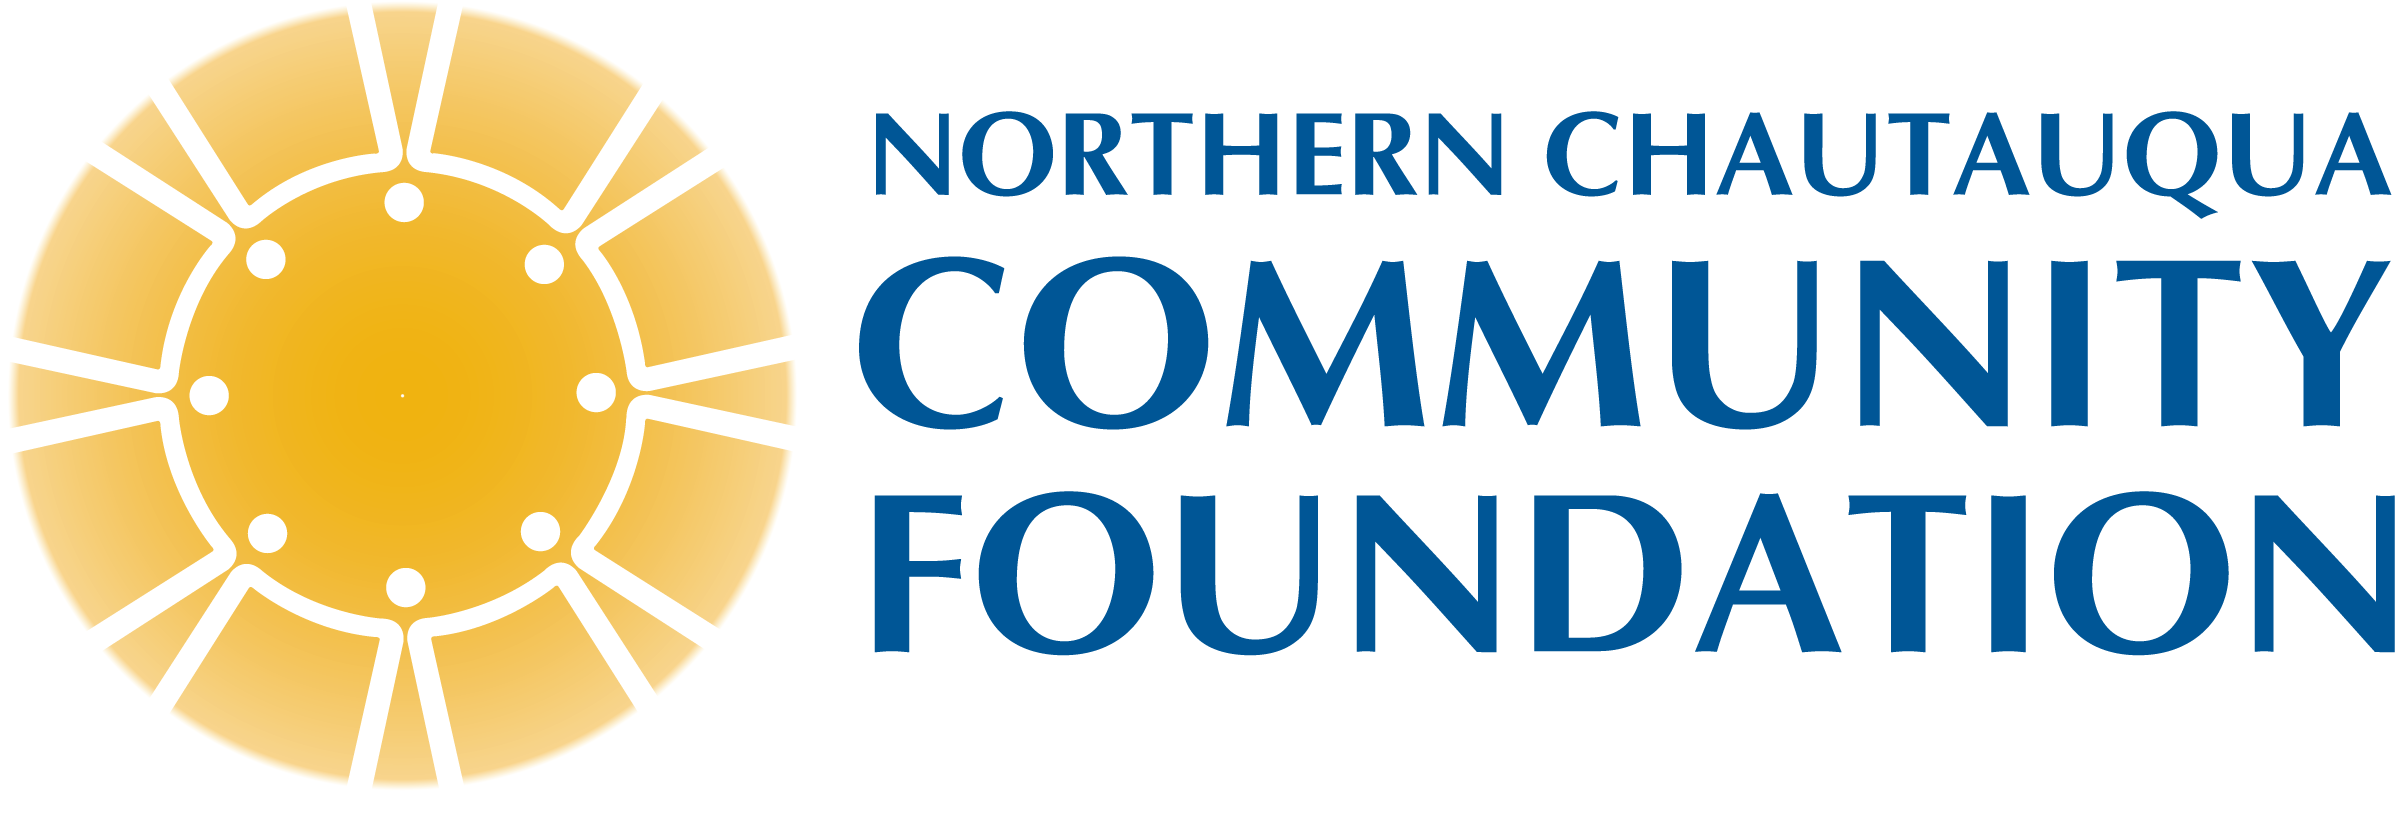 Footprints Award — Northern Chautauqua Community Foundation